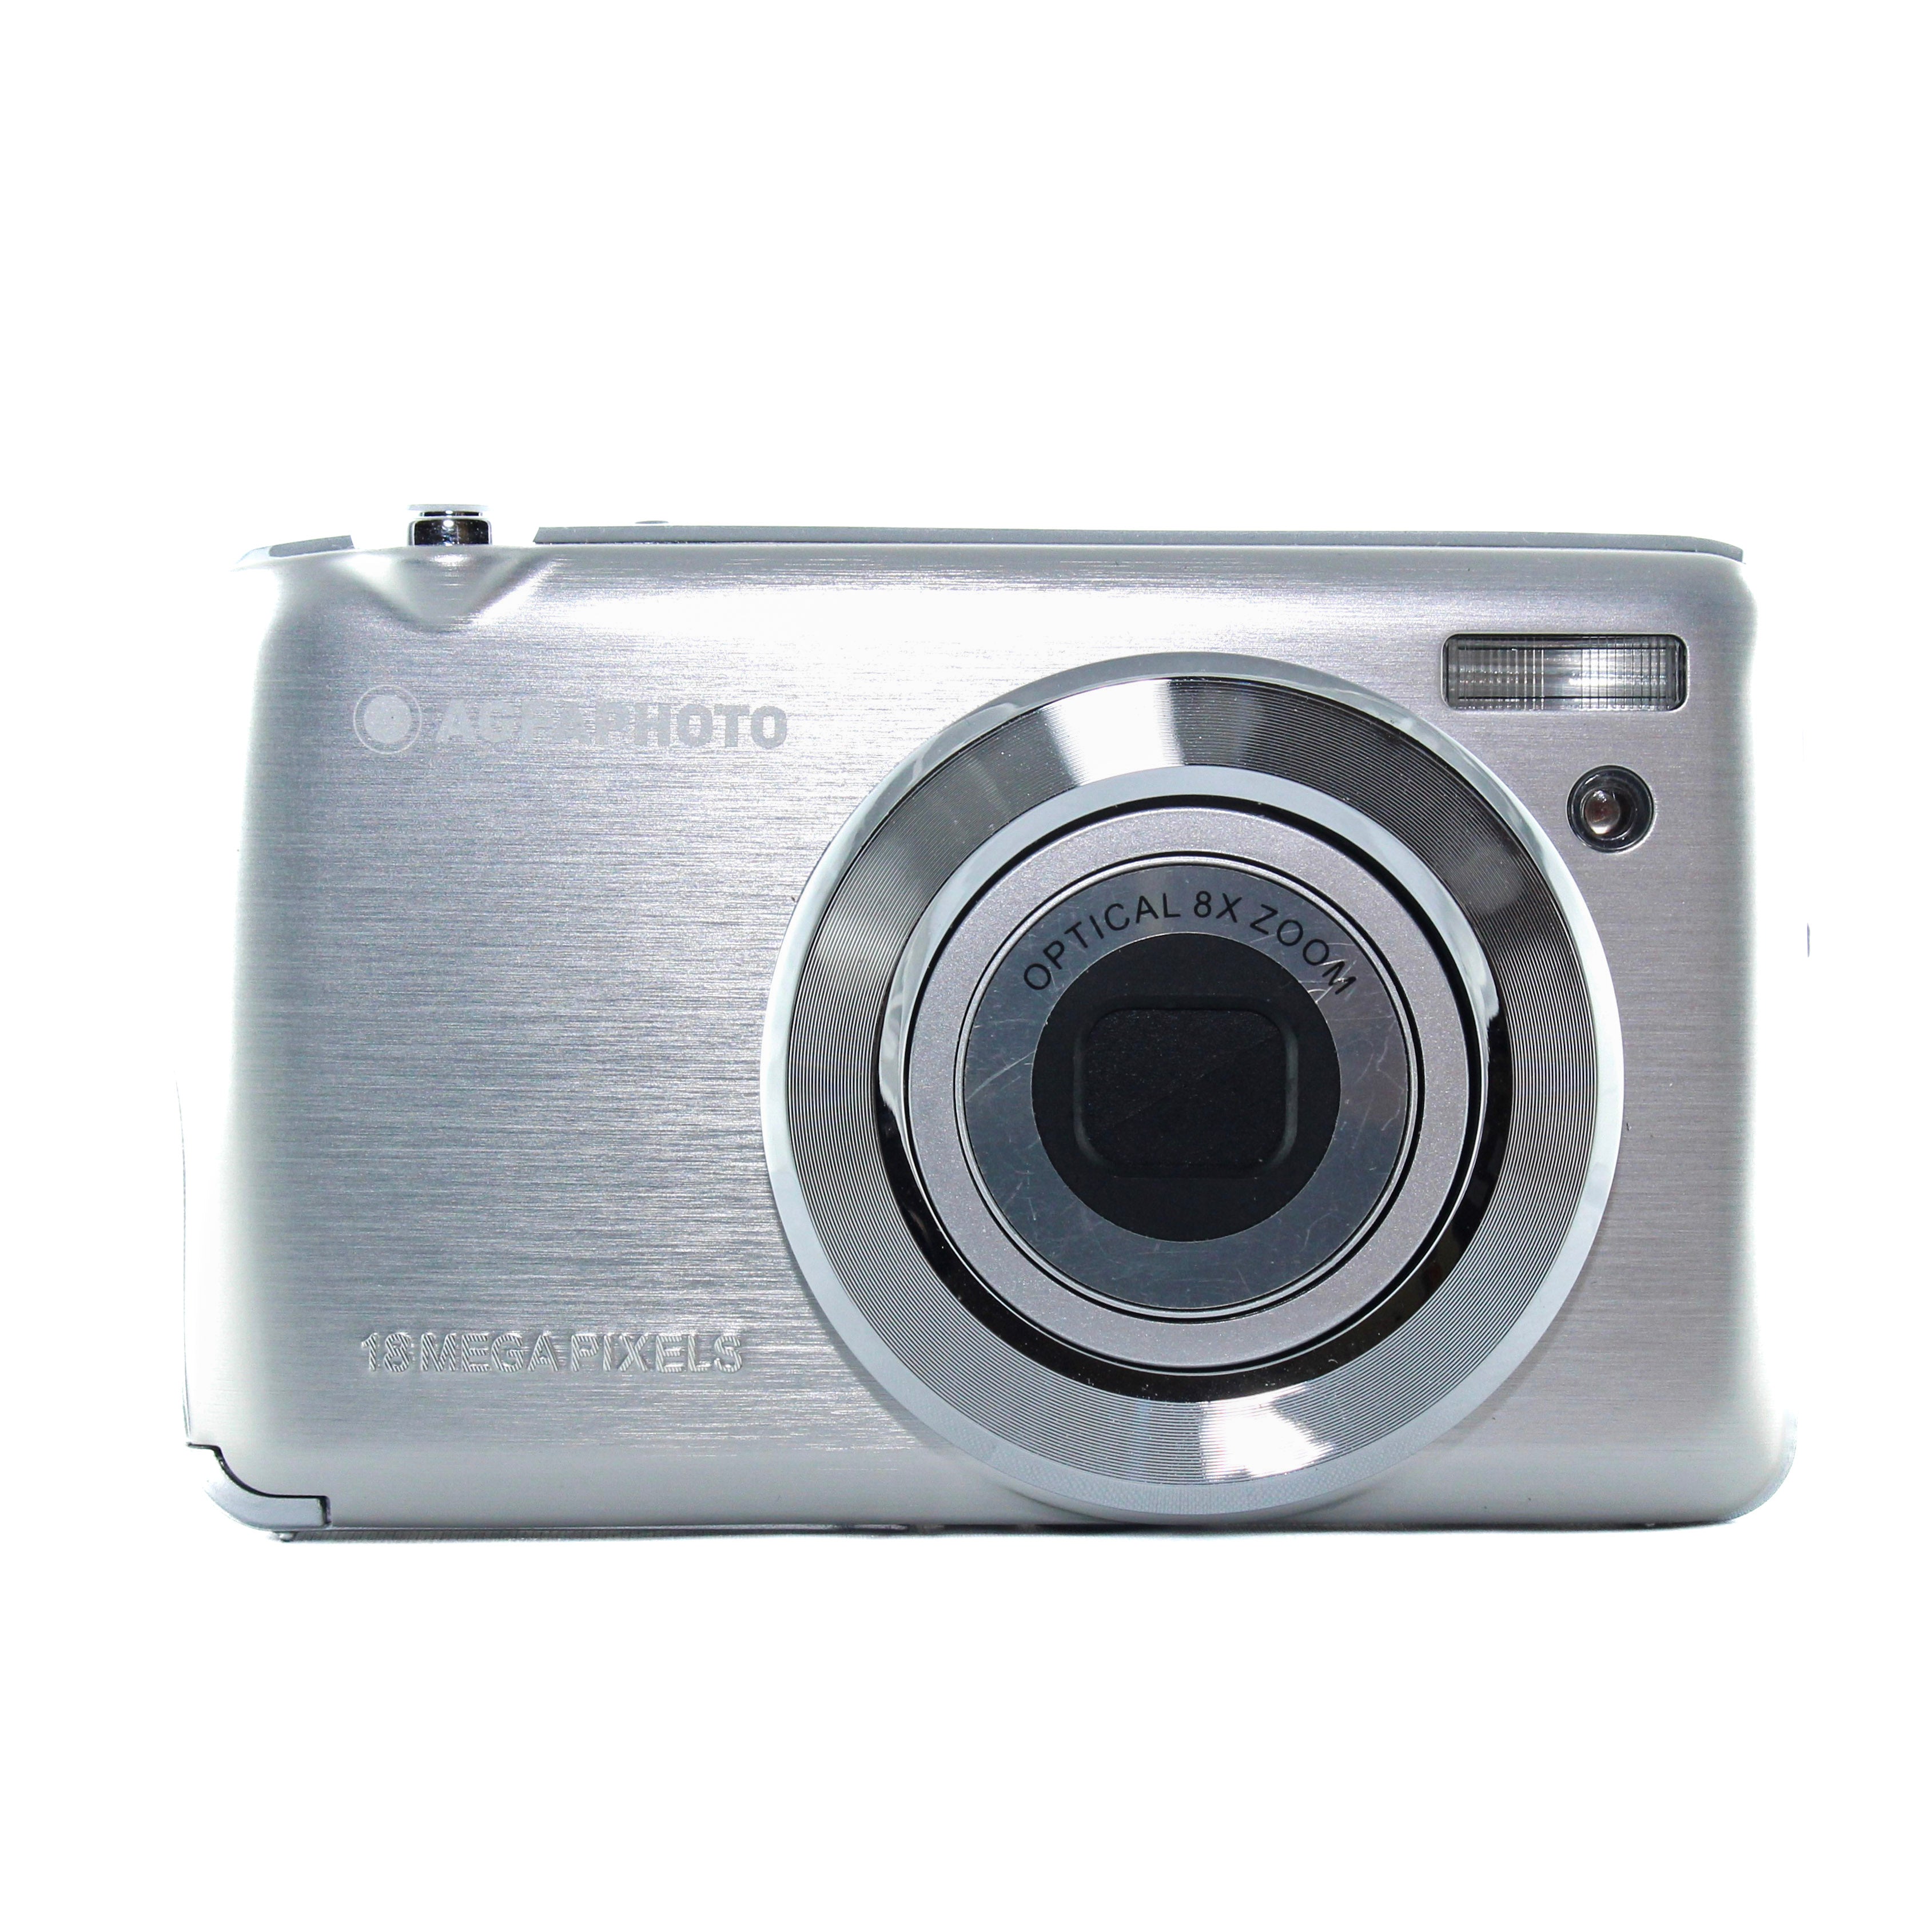 Agfa Realishot DC8200 Digital Compact Camera Kit